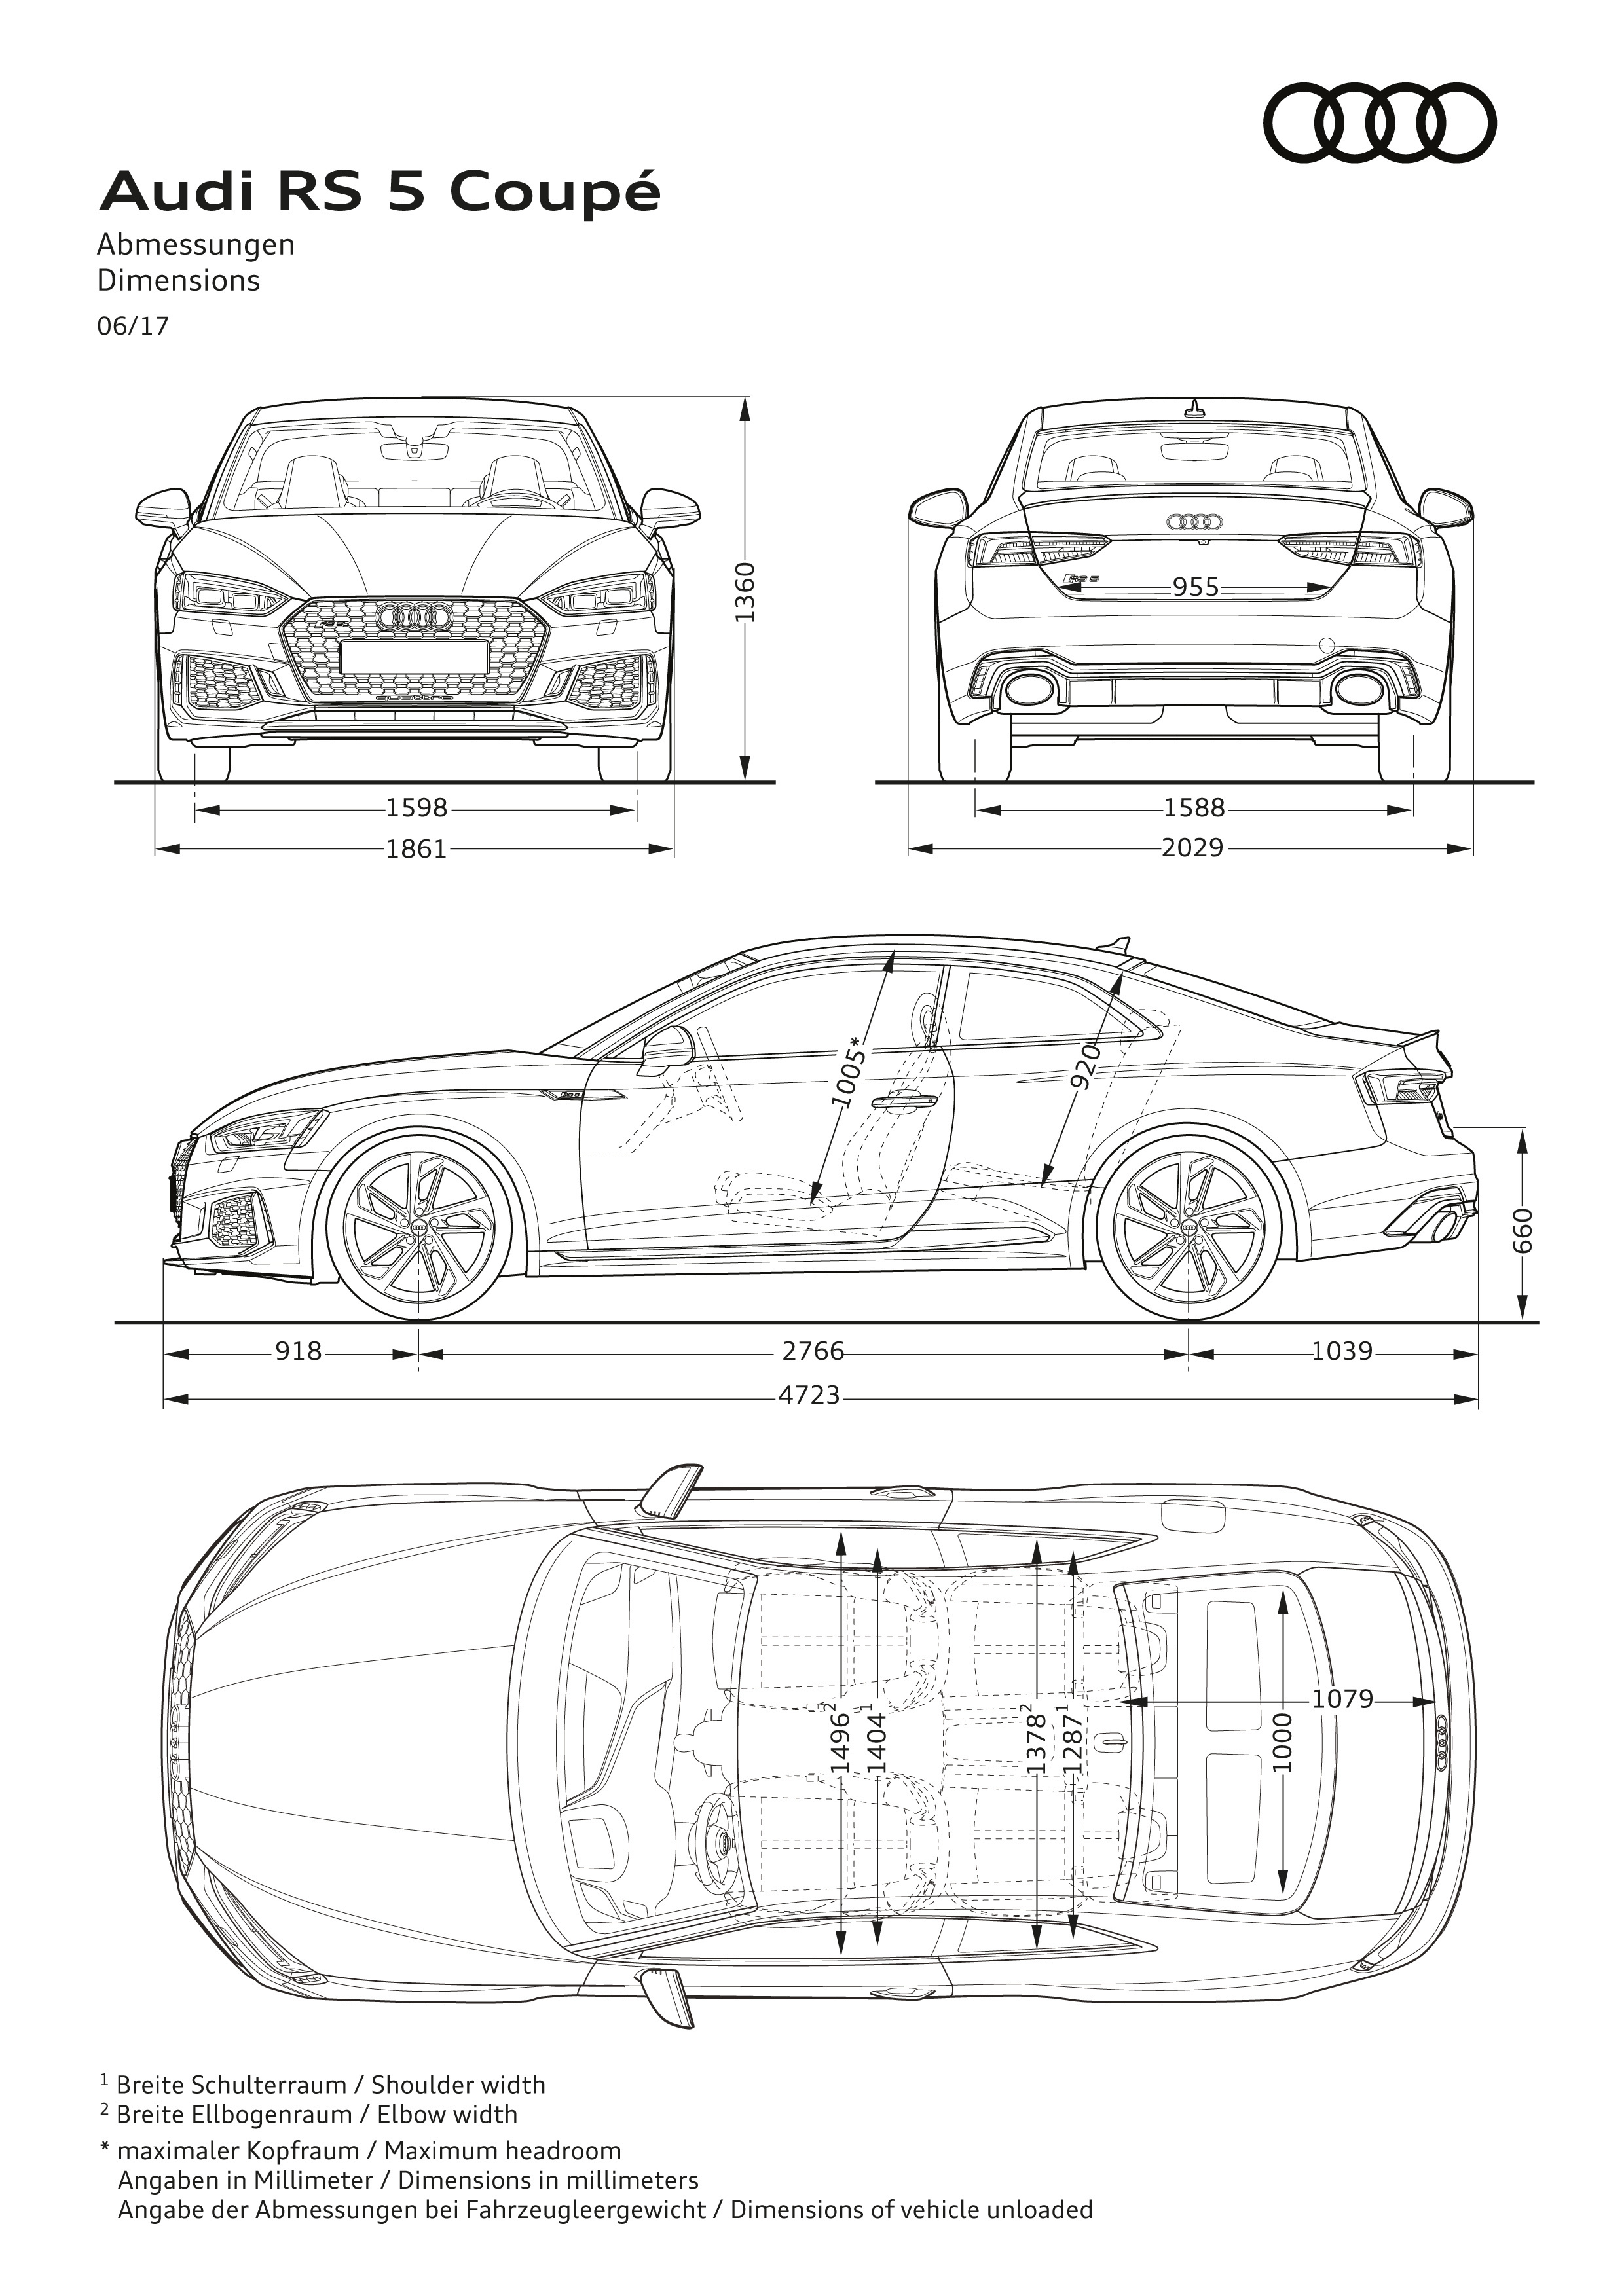 Yeni Audi RS 5 Coupe resim galerisi